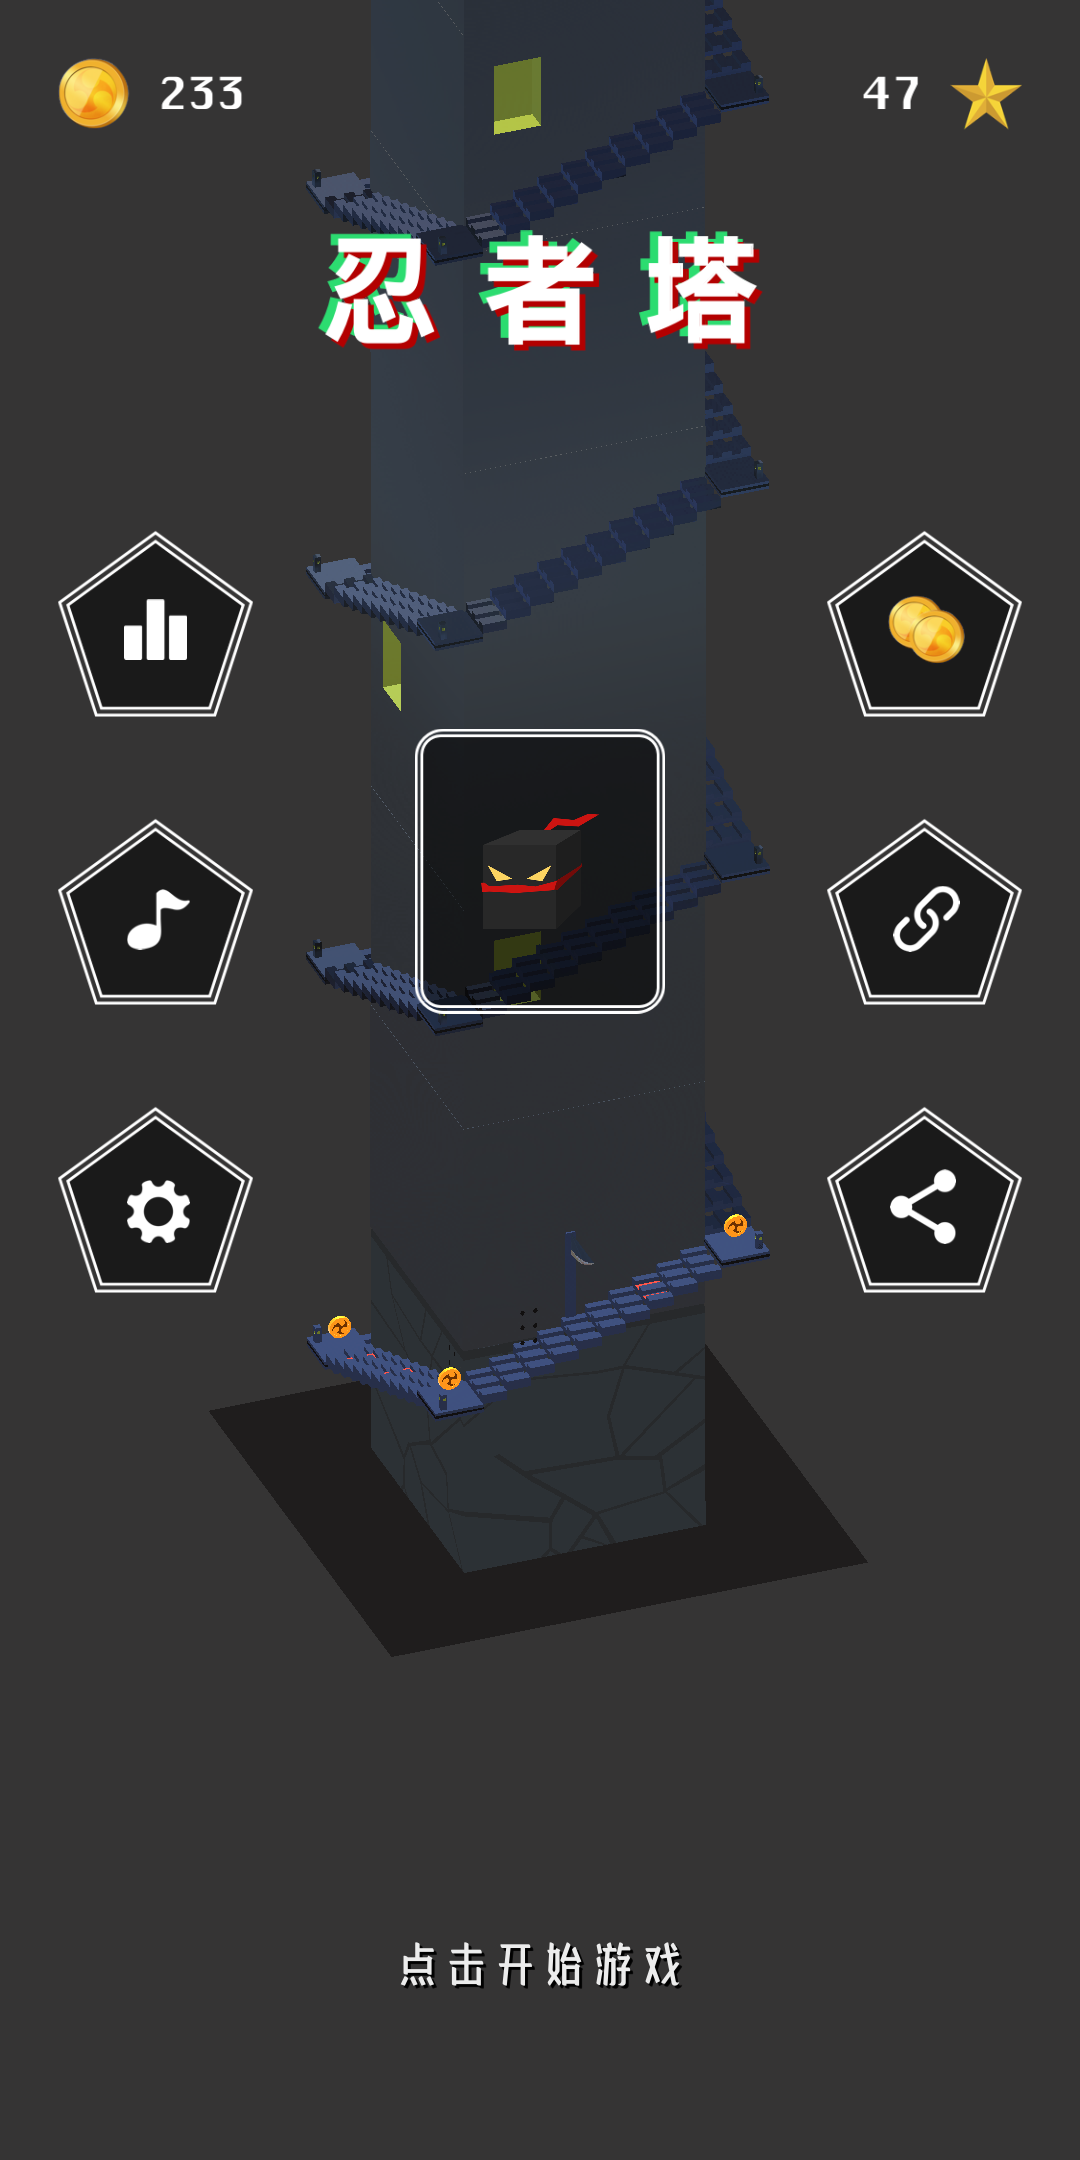 Screenshot 1 of Ninja-Turm 1.0.4